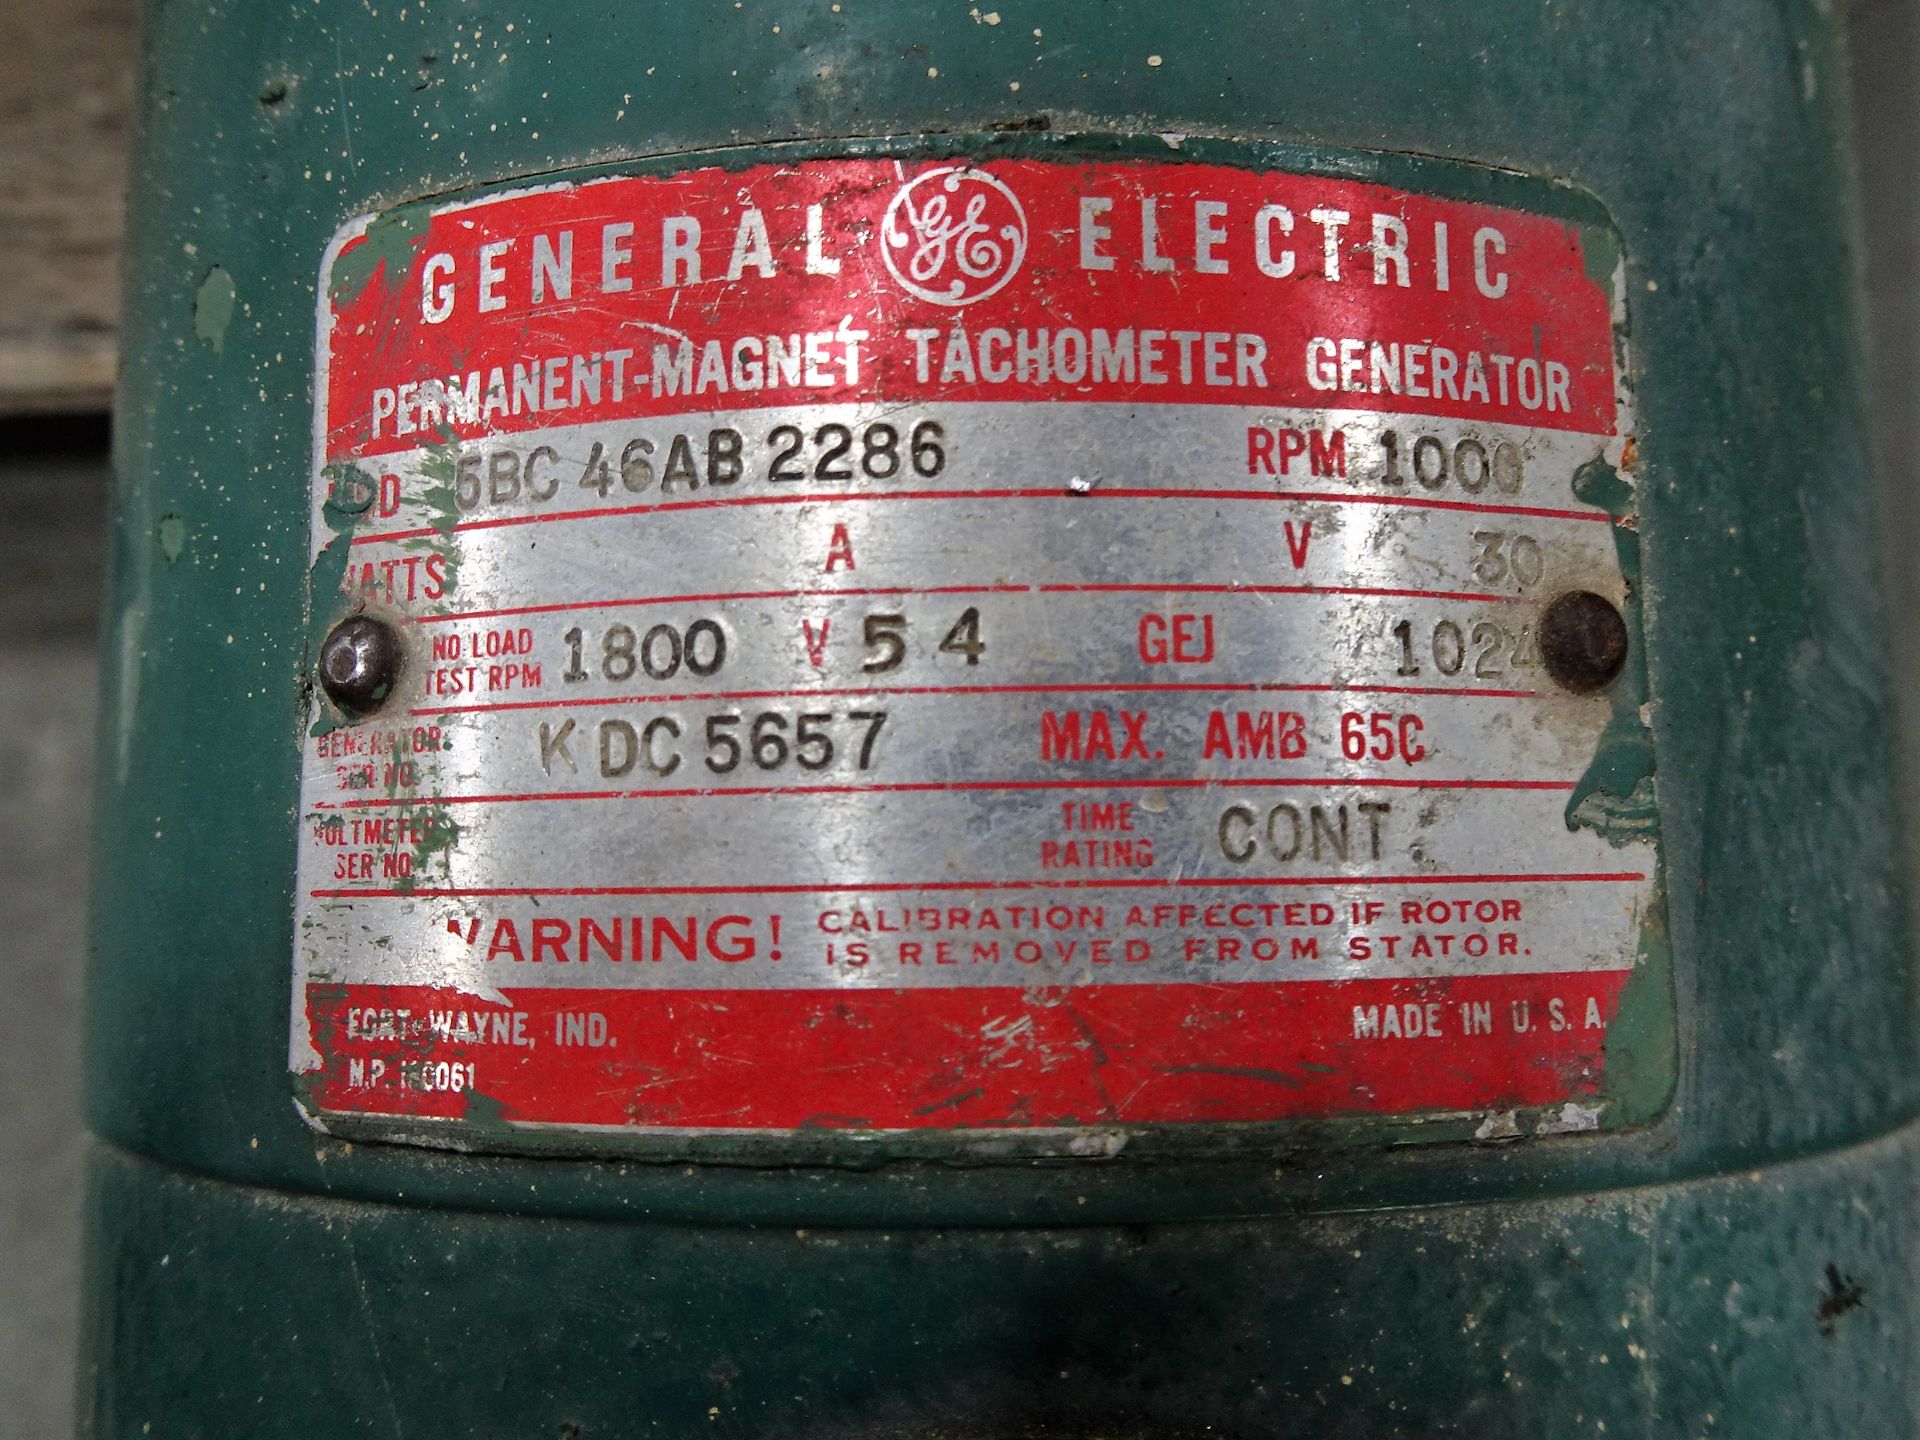 10 HP General Electric 25BC 46AB 2286 Motor - Image 2 of 3